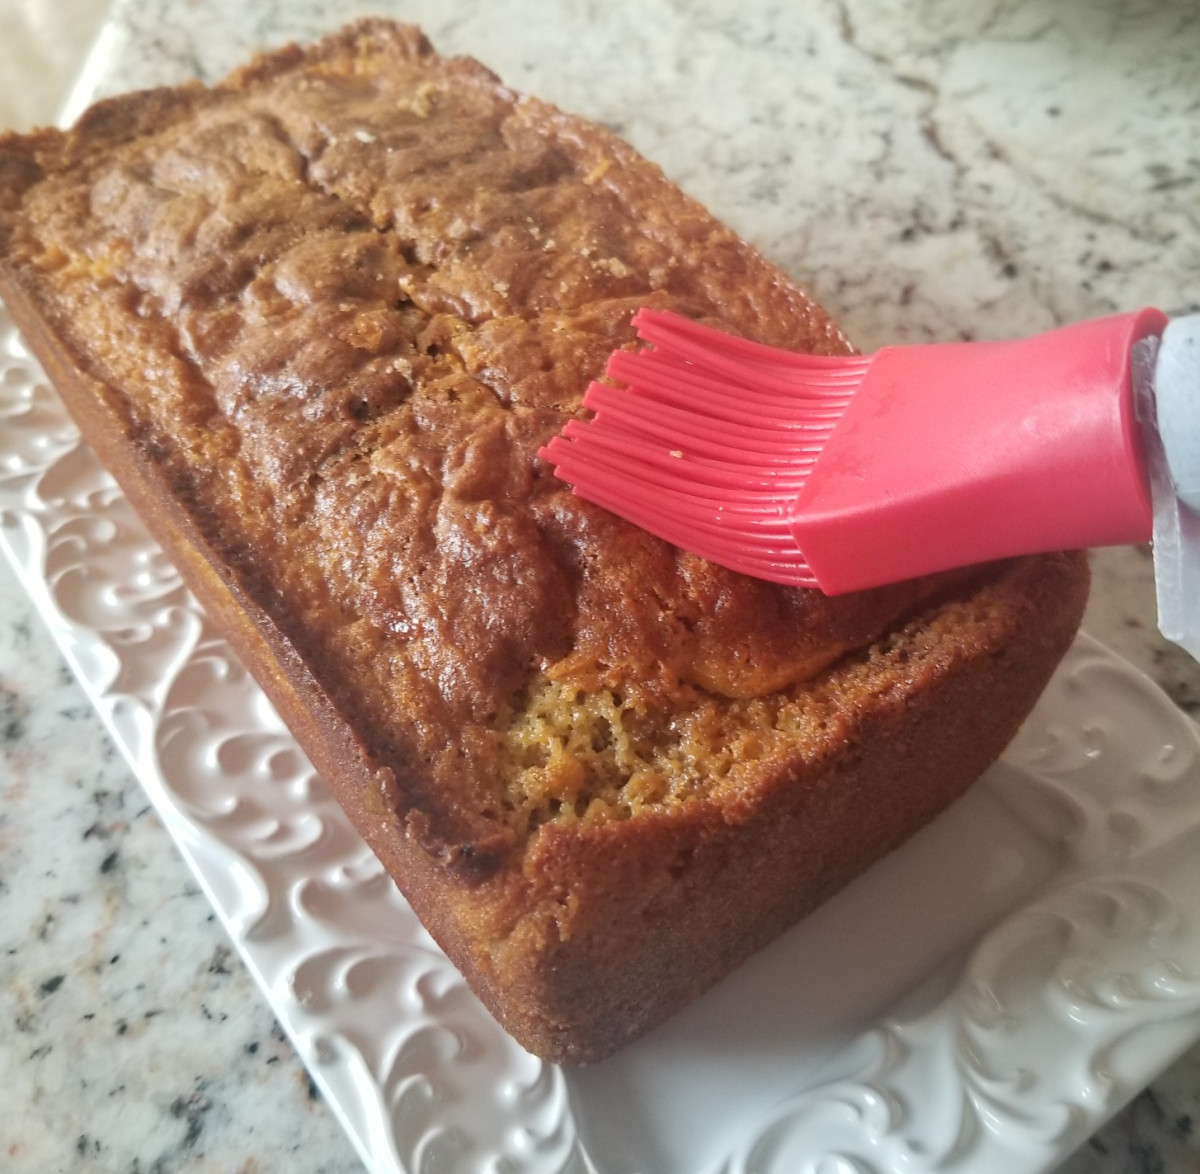 Brushing a thin glaze on a cake makes it easy to evenly distribute the glaze. Photo by Abby Slutsky